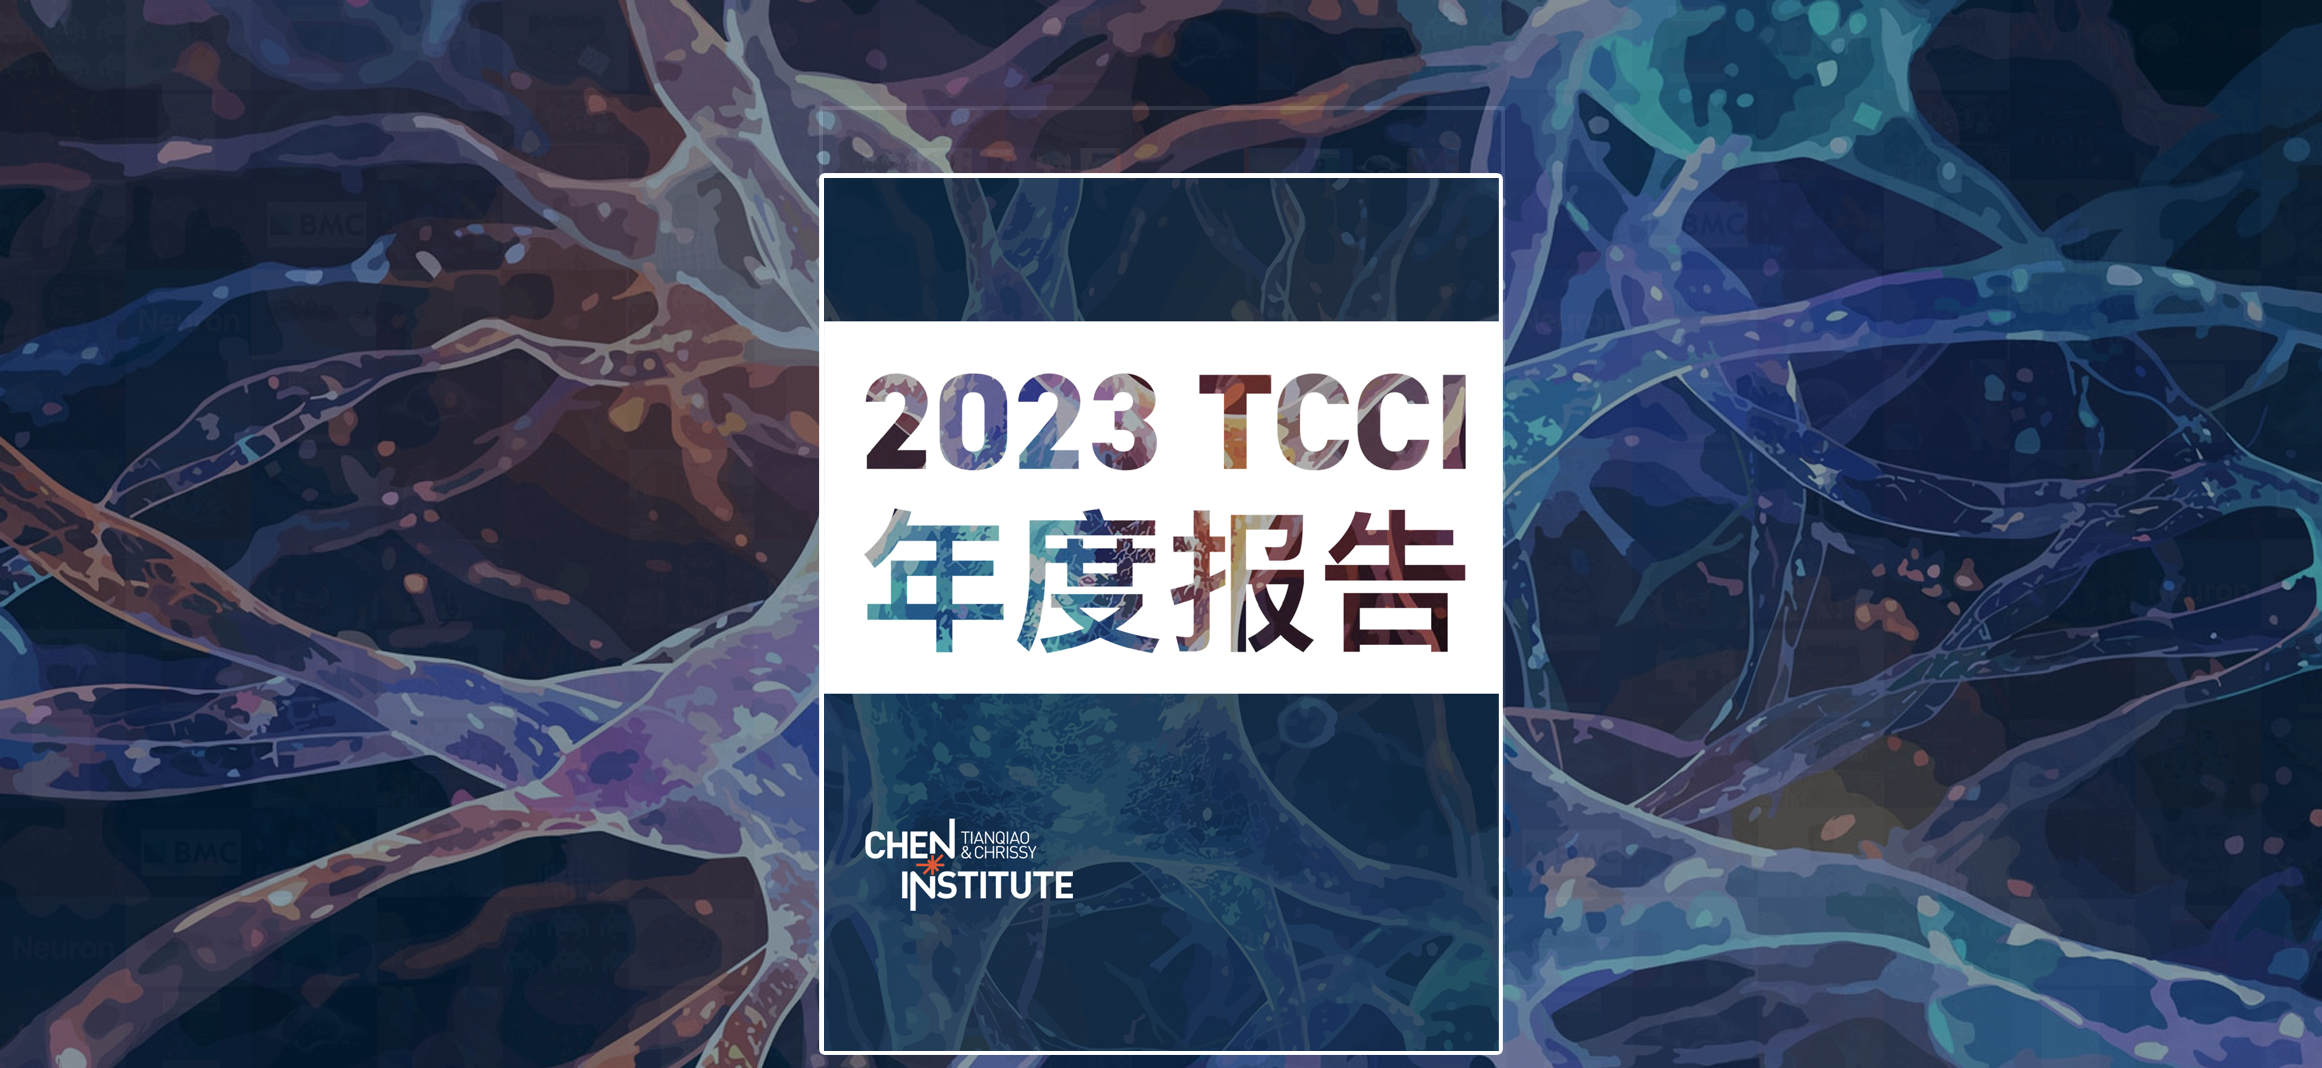 TCCI 2023年度报告